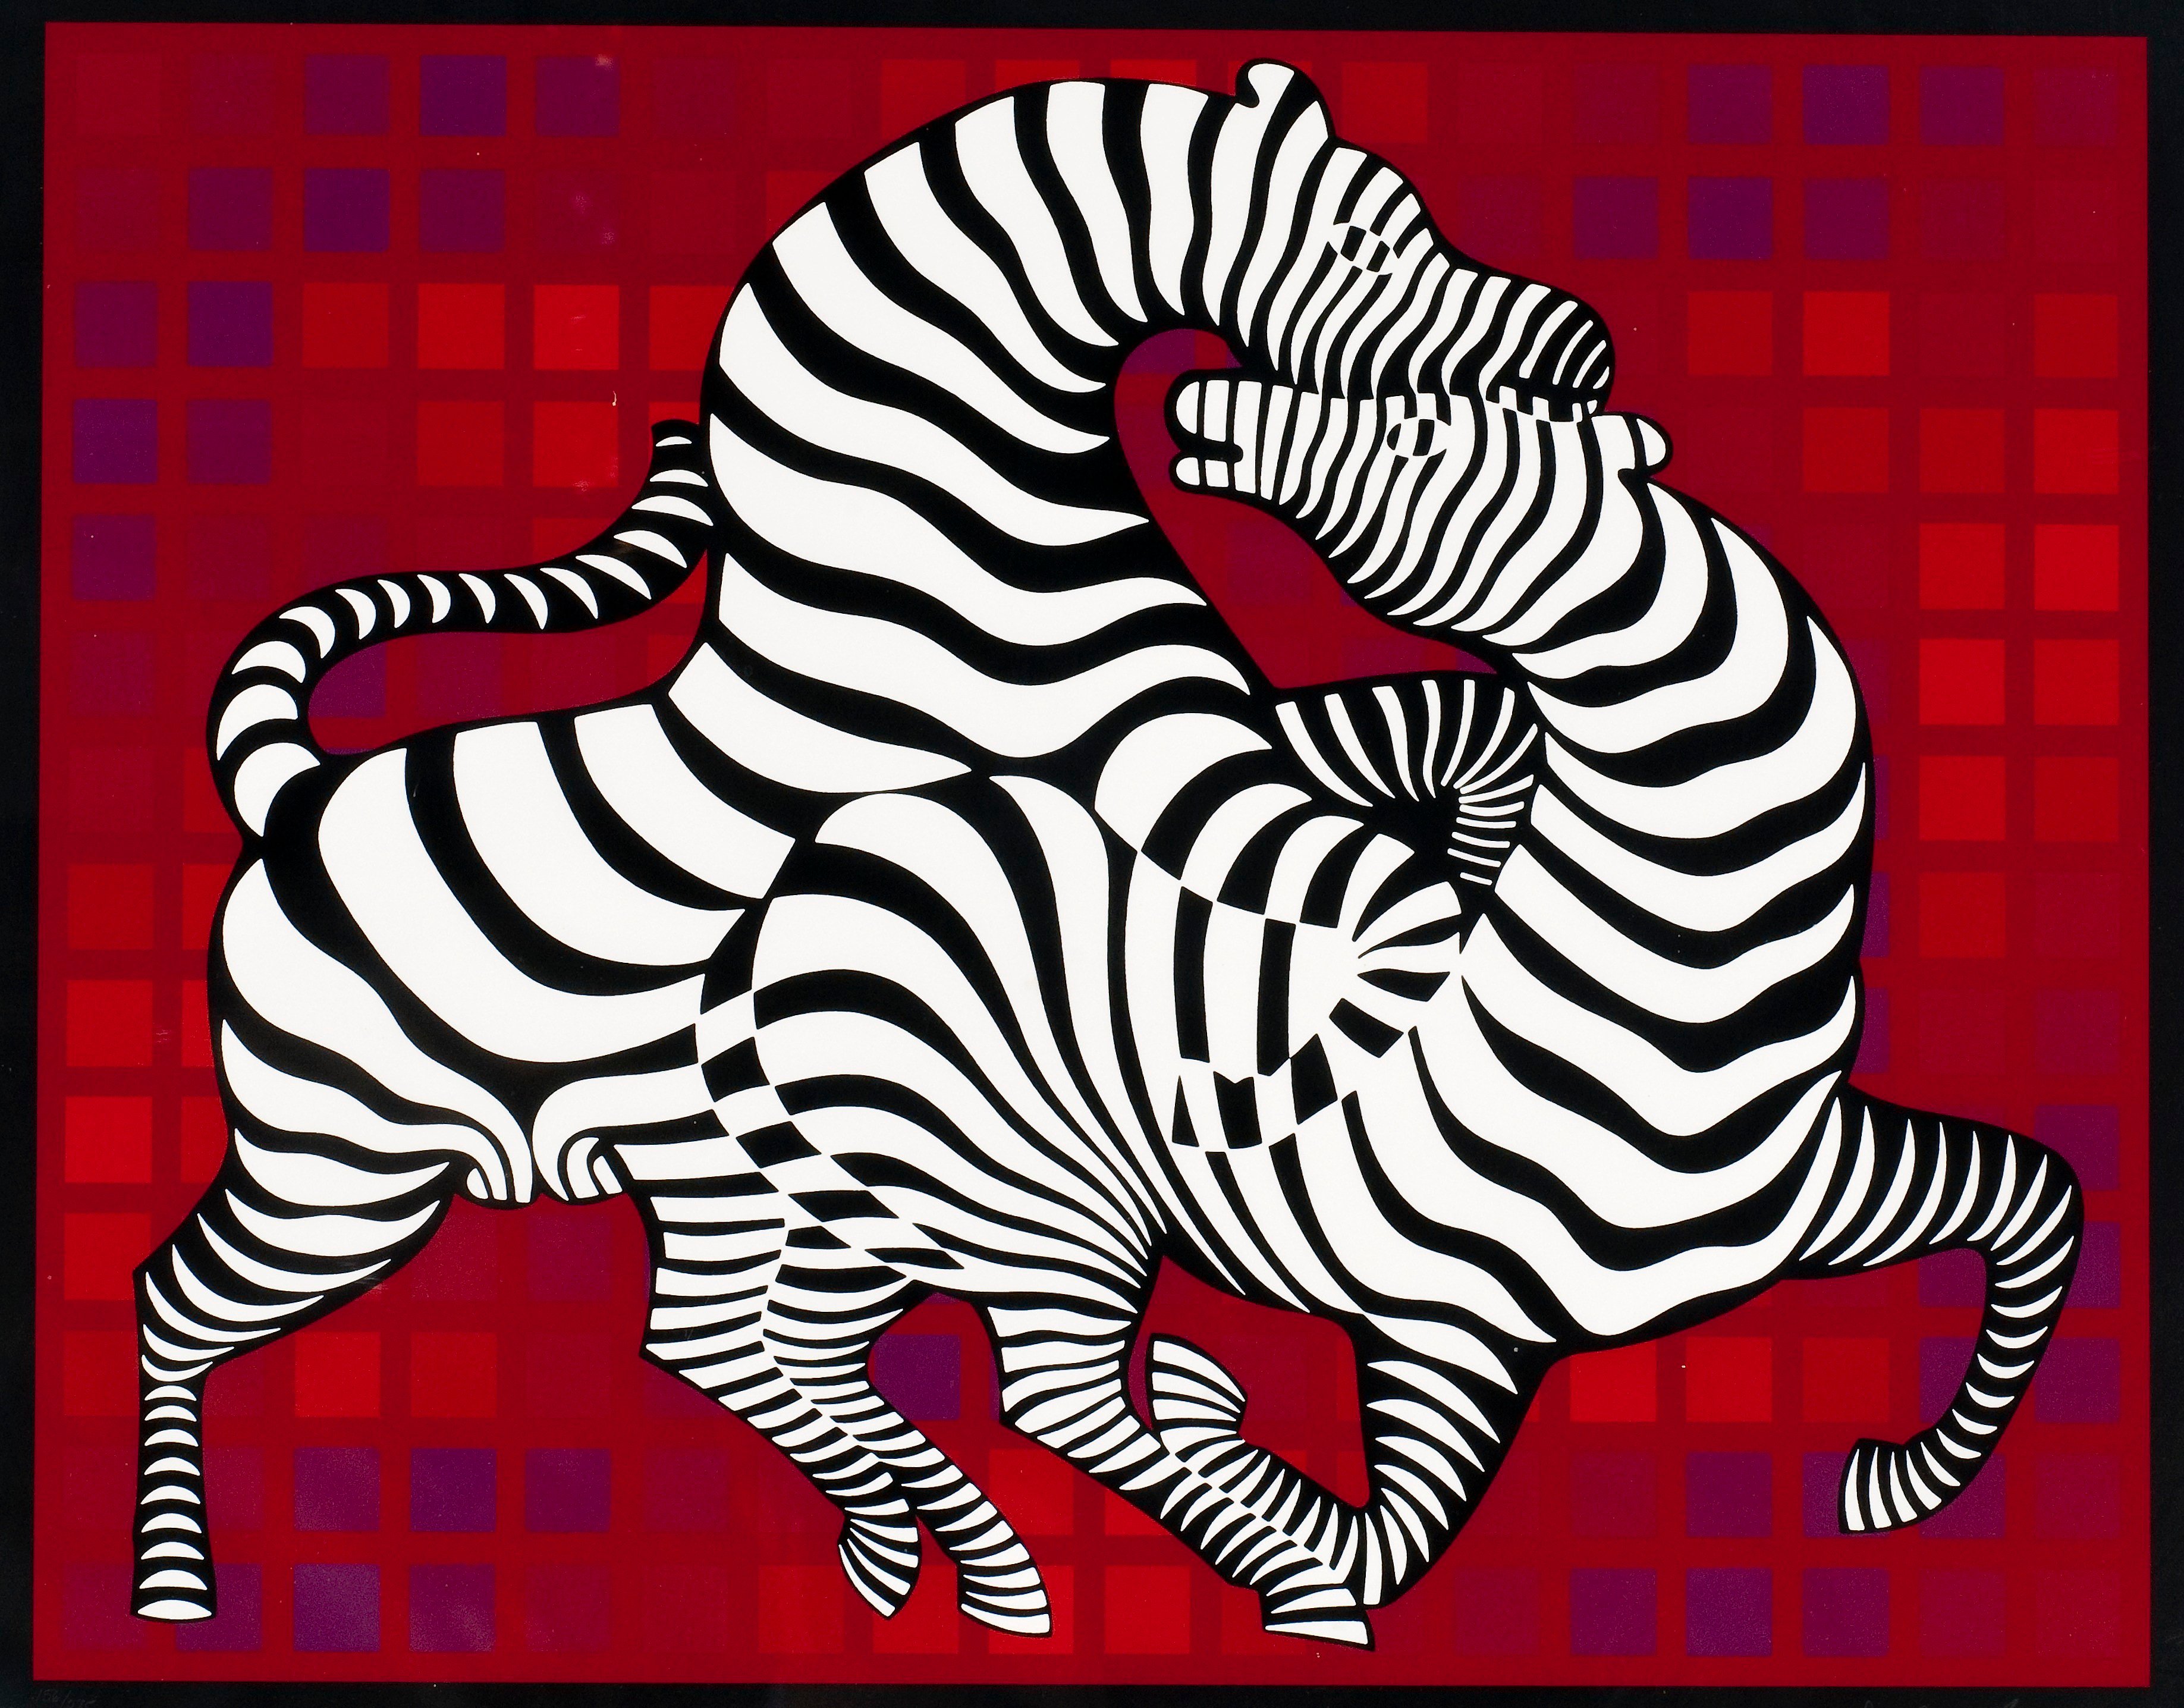 Victor Vasarely - Playful zebras